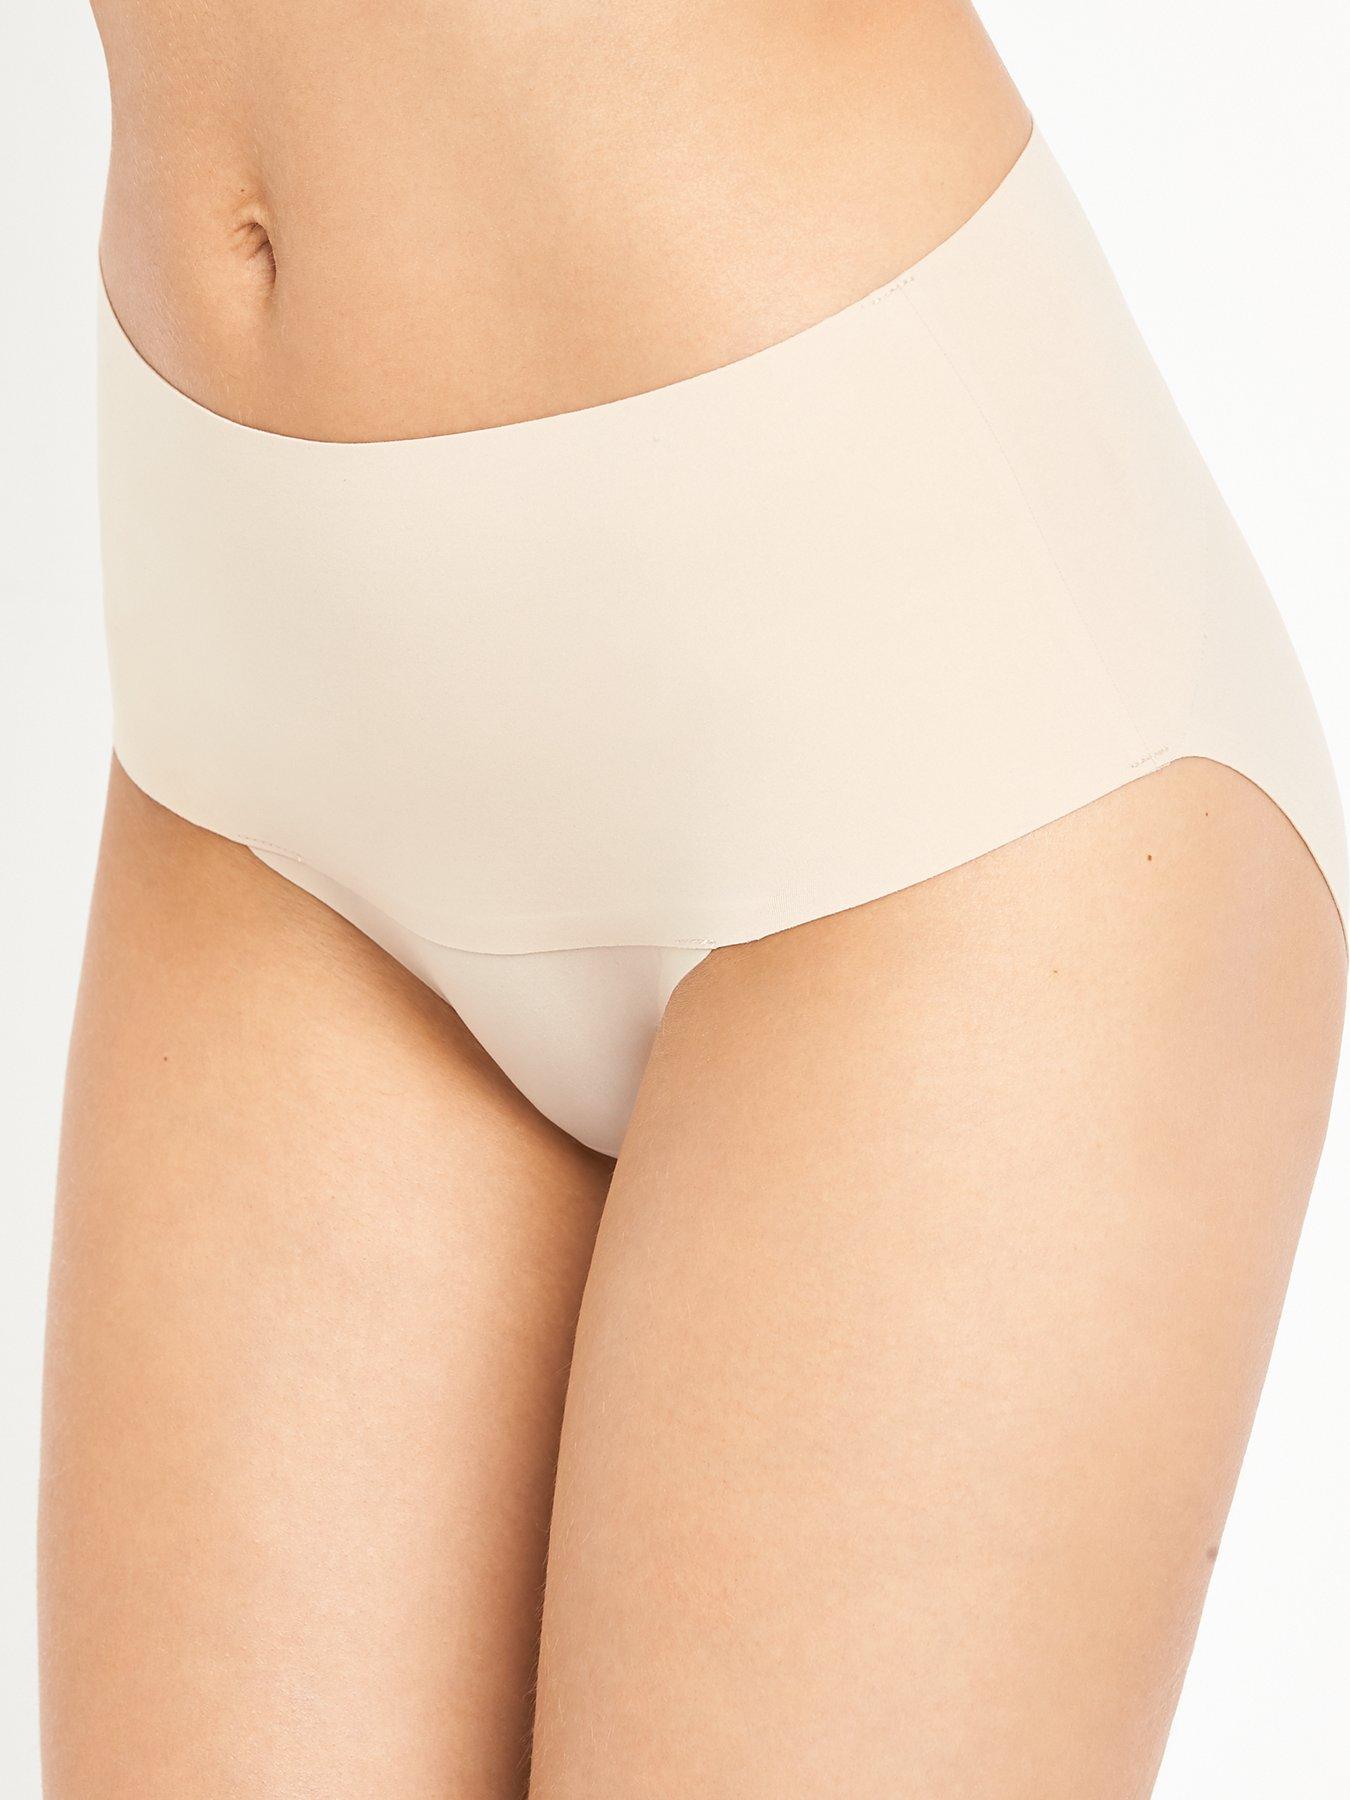 Spanx Women's Higher Power Panties, Soft Nude, S UK 